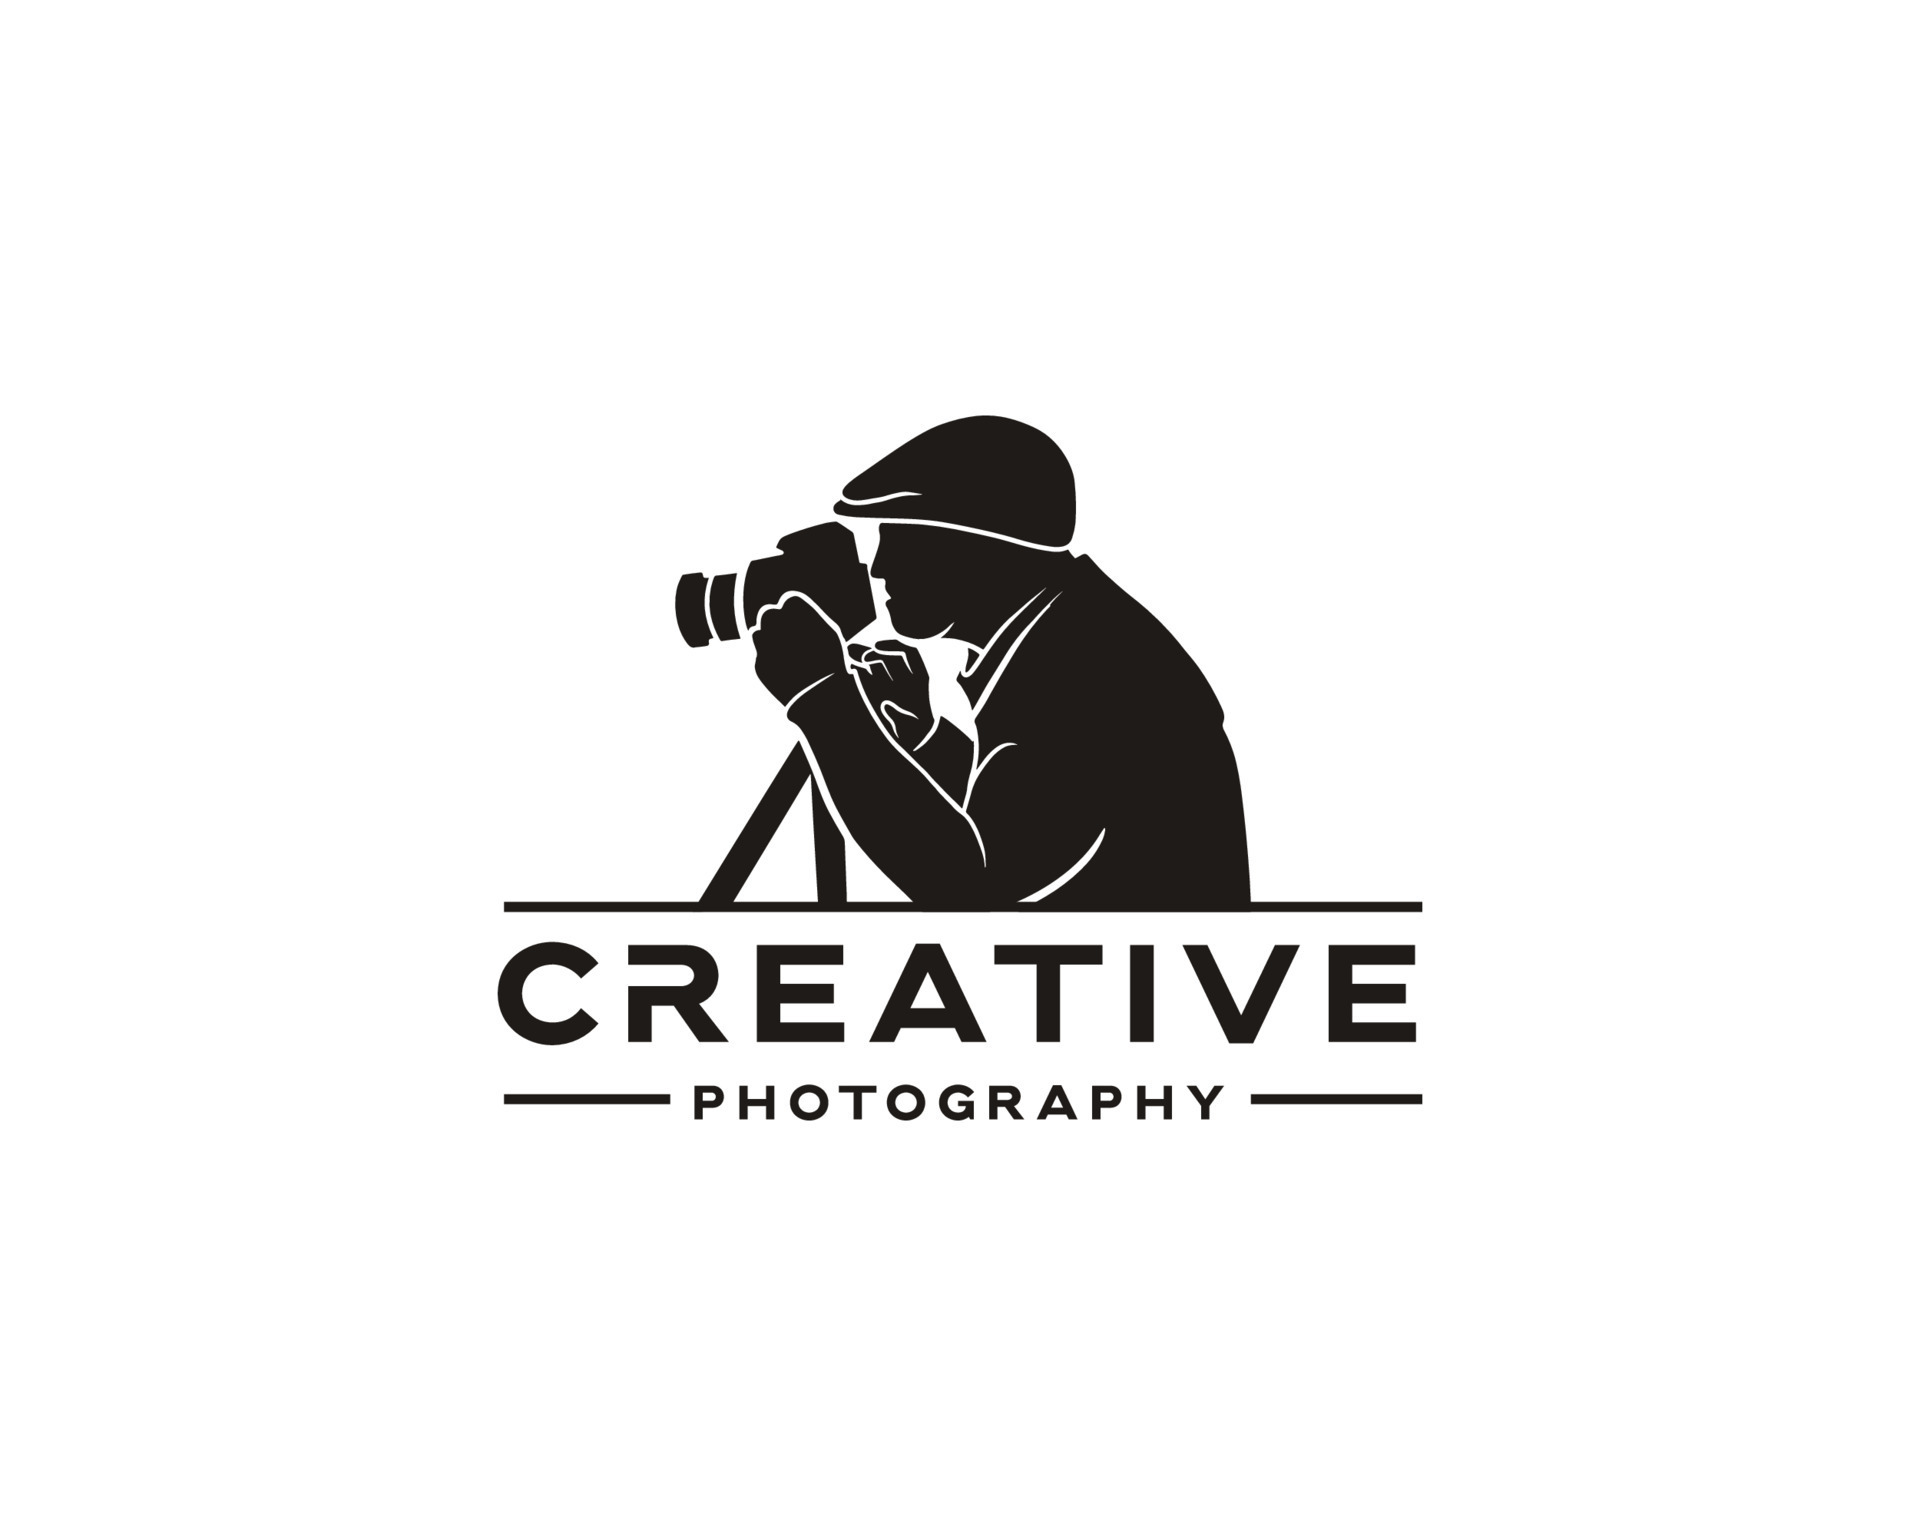 Vintage creative photography Logo design for photographer or ...